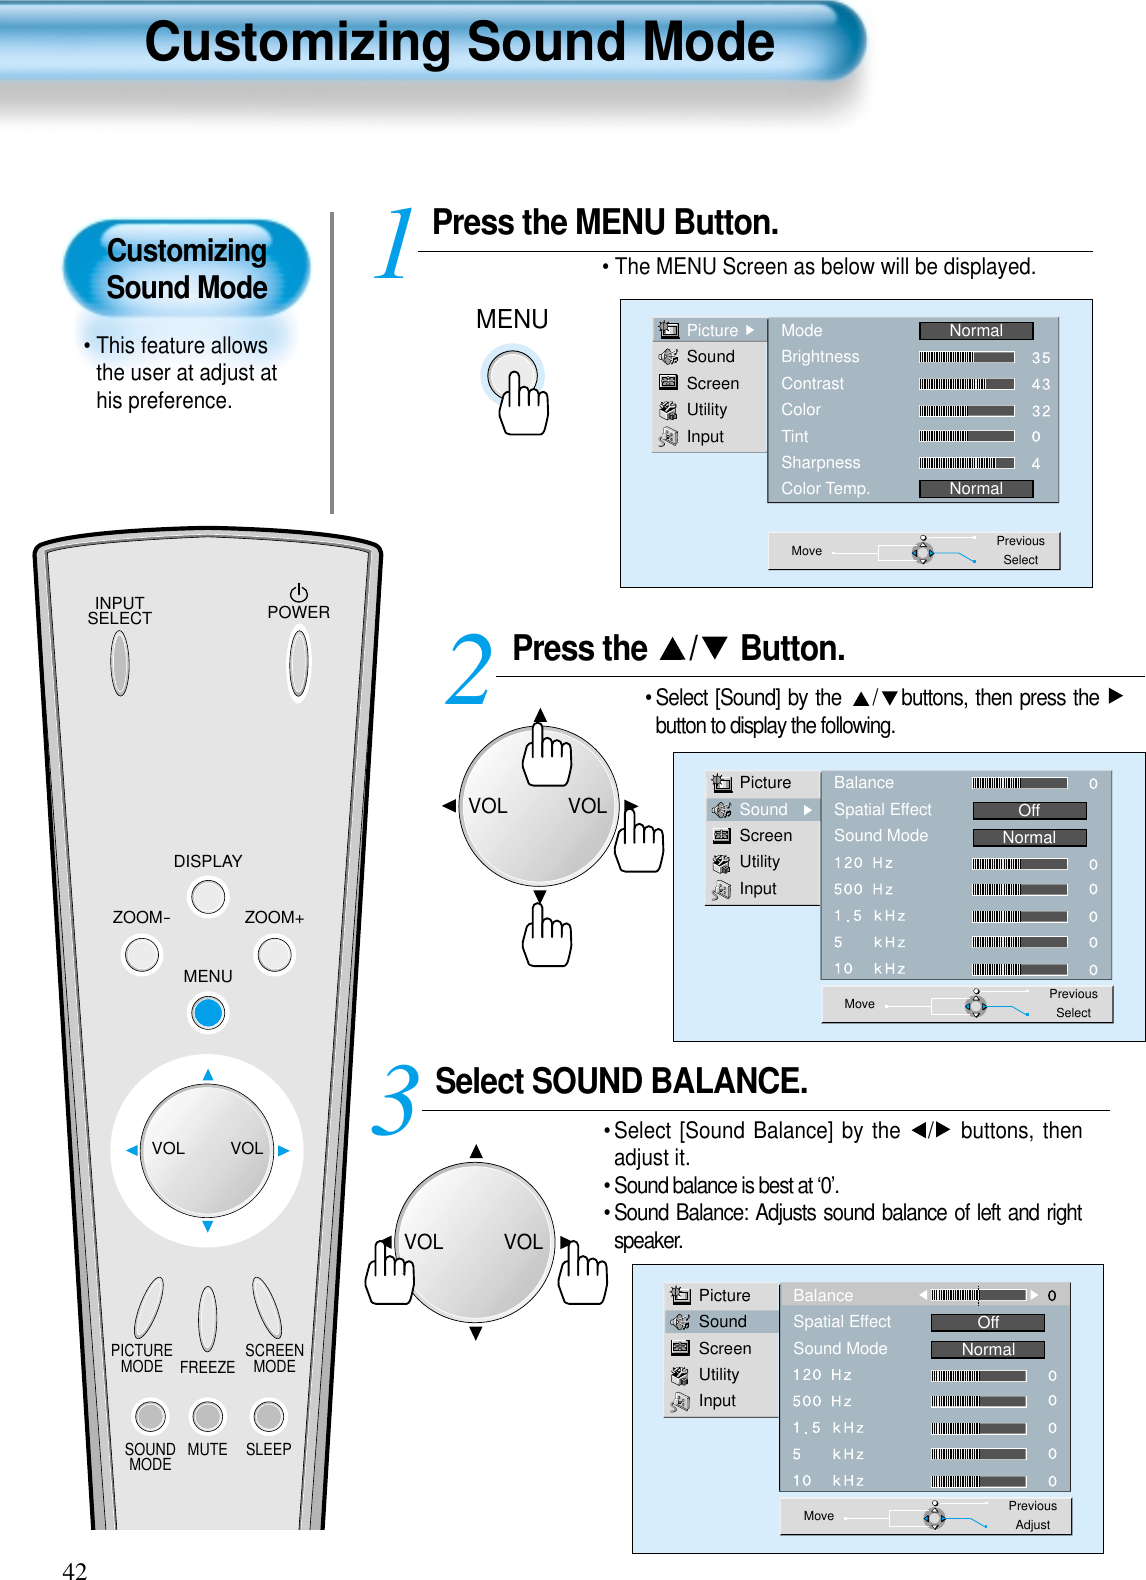 CustomizingSound Mode• This feature allowsthe user at adjust athis preference. Customizing Sound Mode42Press the  / Button. • Select [Sound] by the  / buttons, then press the button to display the following.Select SOUND BALANCE. • Select [Sound Balance] by the  / buttons, thenadjust it.• Sound balance is best at ‘0’.• Sound Balance: Adjusts sound balance of left and rightspeaker. 3 Press the MENU Button.• The MENU Screen as below will be displayed. 12PictureSoundScreenUtilityInputBalanceSpatial EffectSound ModeOffNormalMove PreviousSelectPictureSoundScreenUtilityInputBalanceSpatial EffectSound ModeOffNormalMove PreviousAdjustMENUPictureSoundScreenUtilityInputModeBrightnessContrastColorTintSharpnessColor Temp.NormalNormalMove PreviousSelectINPUTSELECT POWERDISPLAYZOOM-PICTUREMODE SCREENMODEFREEZEMUTESOUNDMODE SLEEPZOOM+MENUVOL VOLVOLVOLVOLVOL